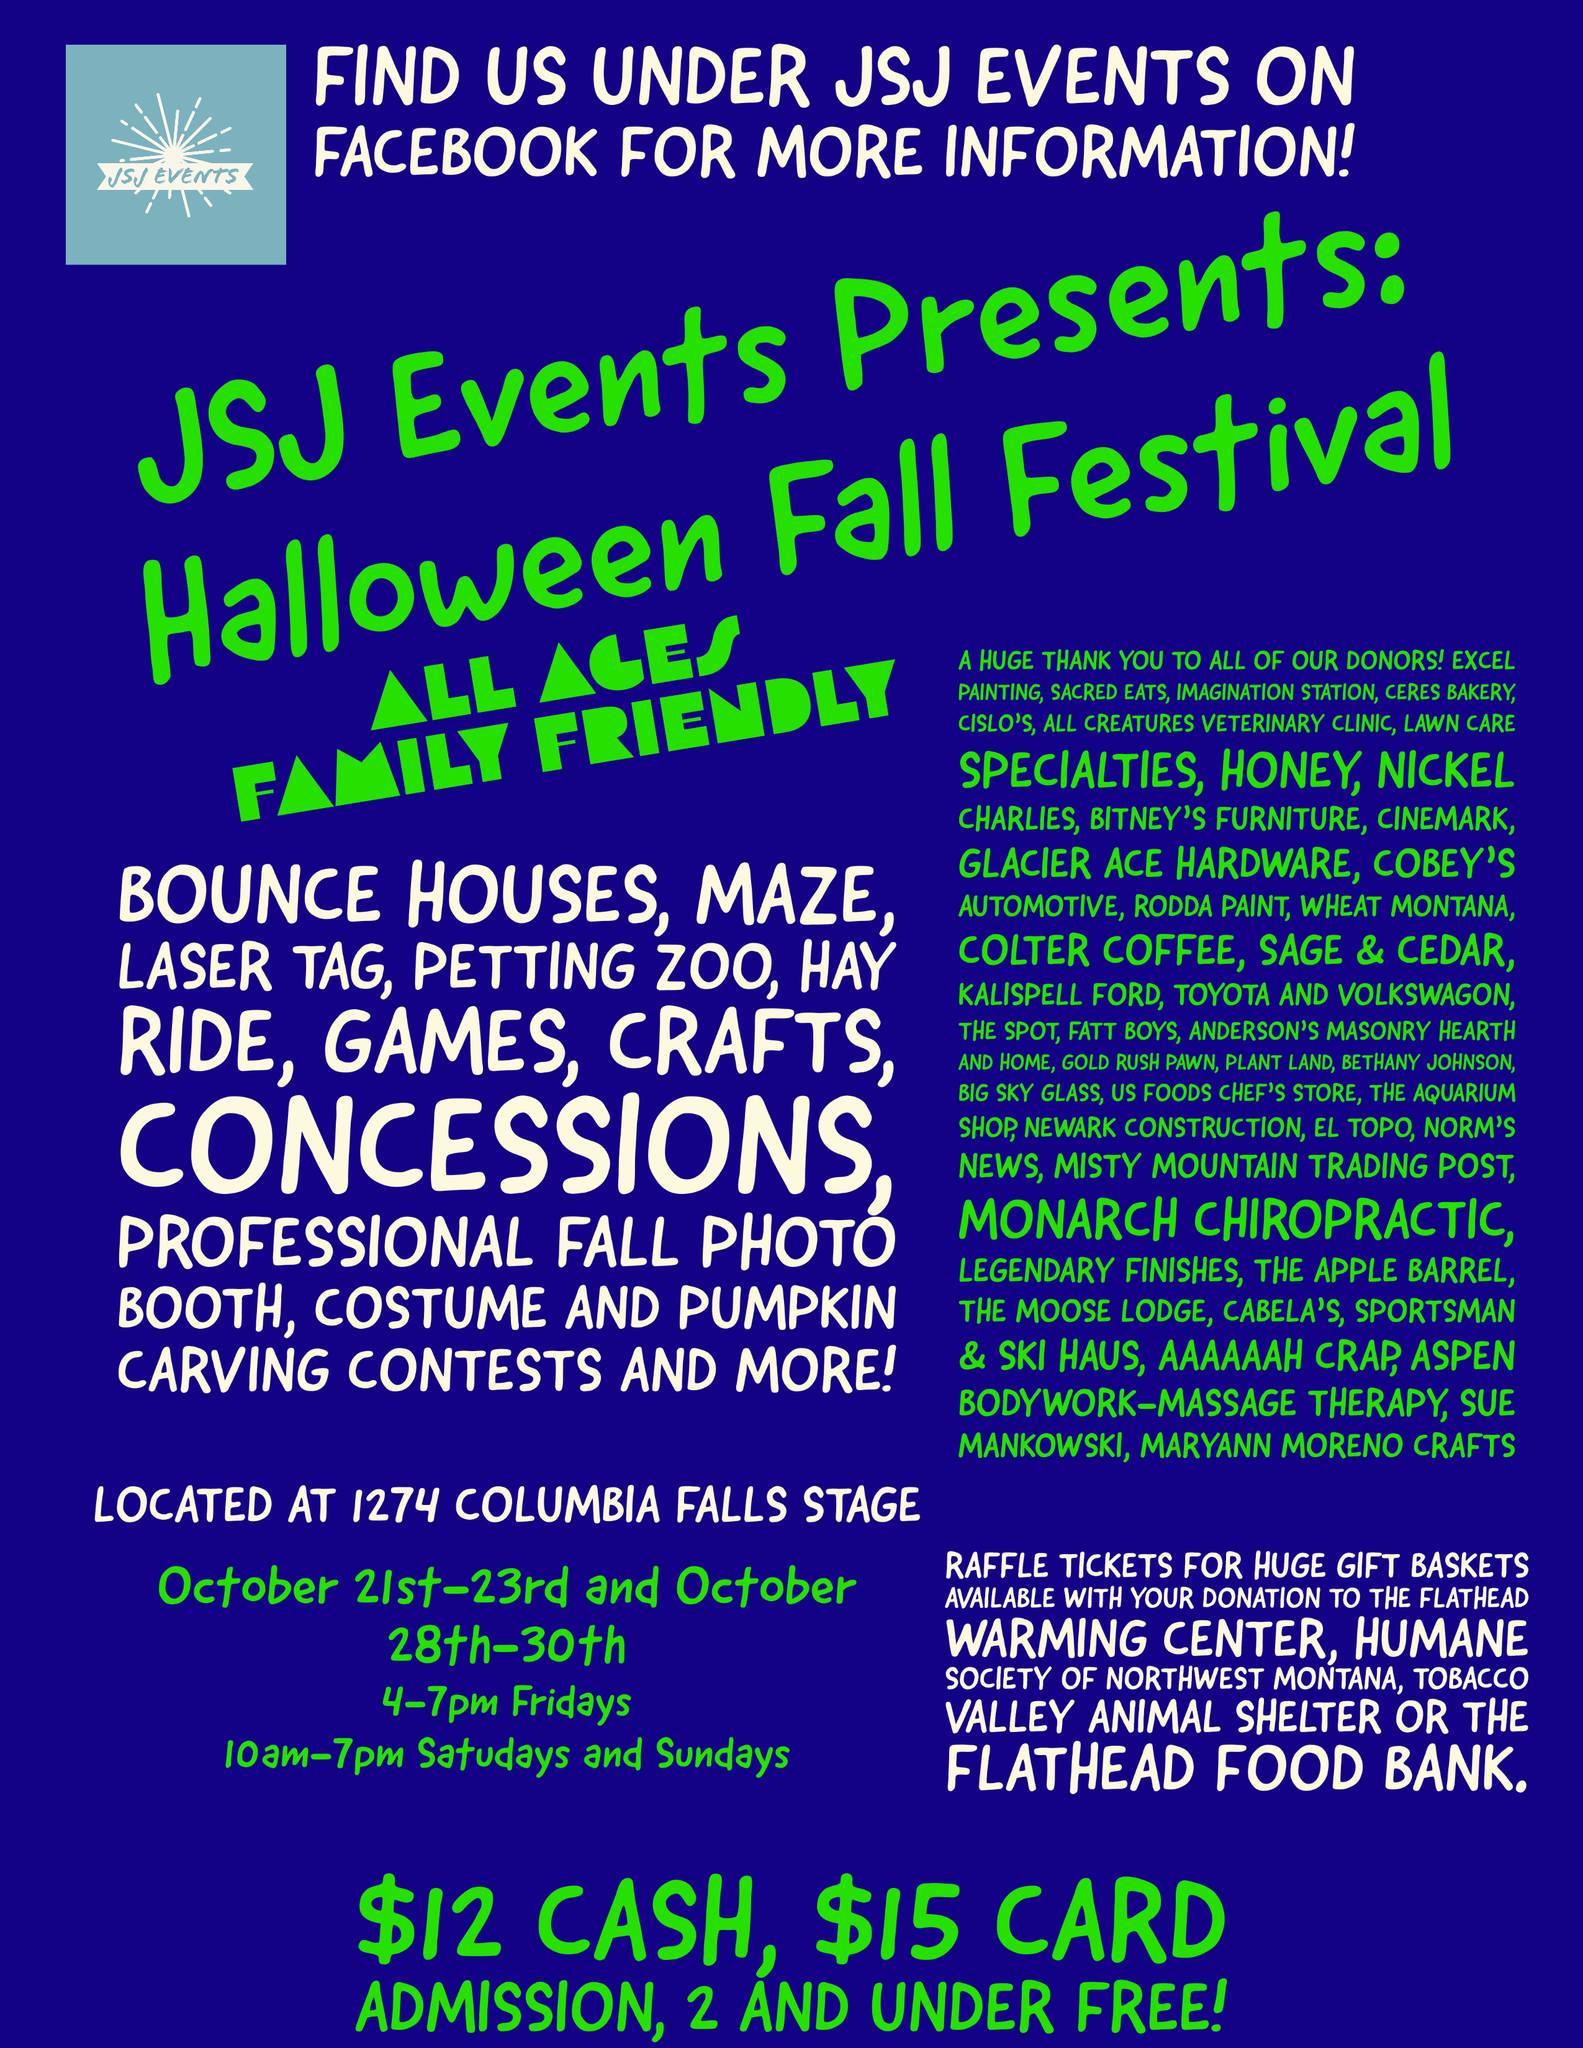 Flathead Valley's Premier Halloween Fall Festival